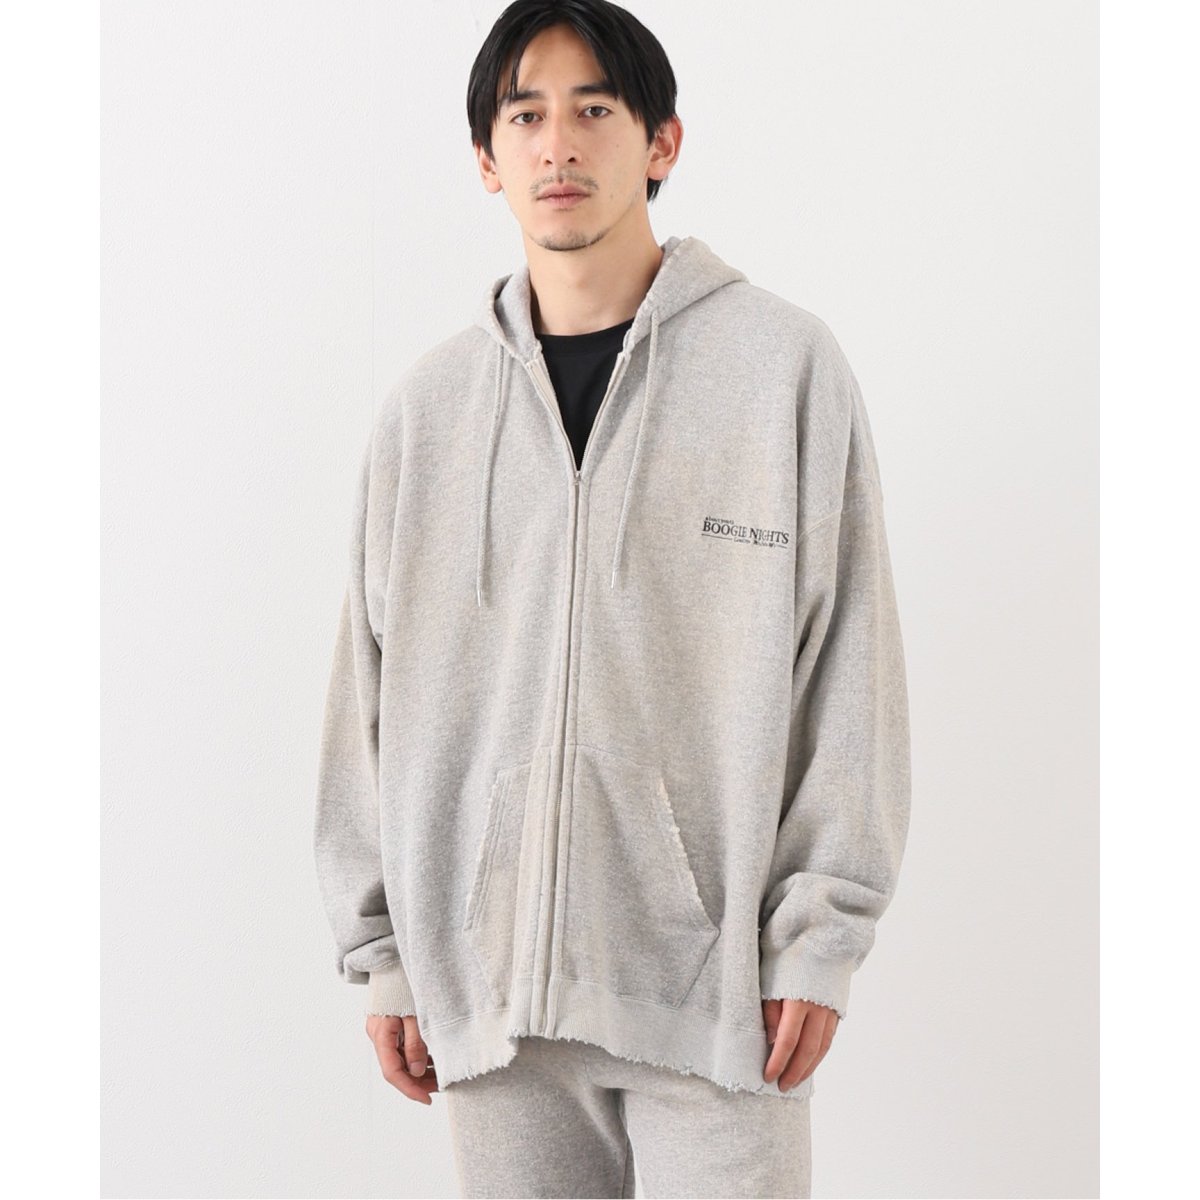 16,800円DAIRIKU ponyboy zip hoodie